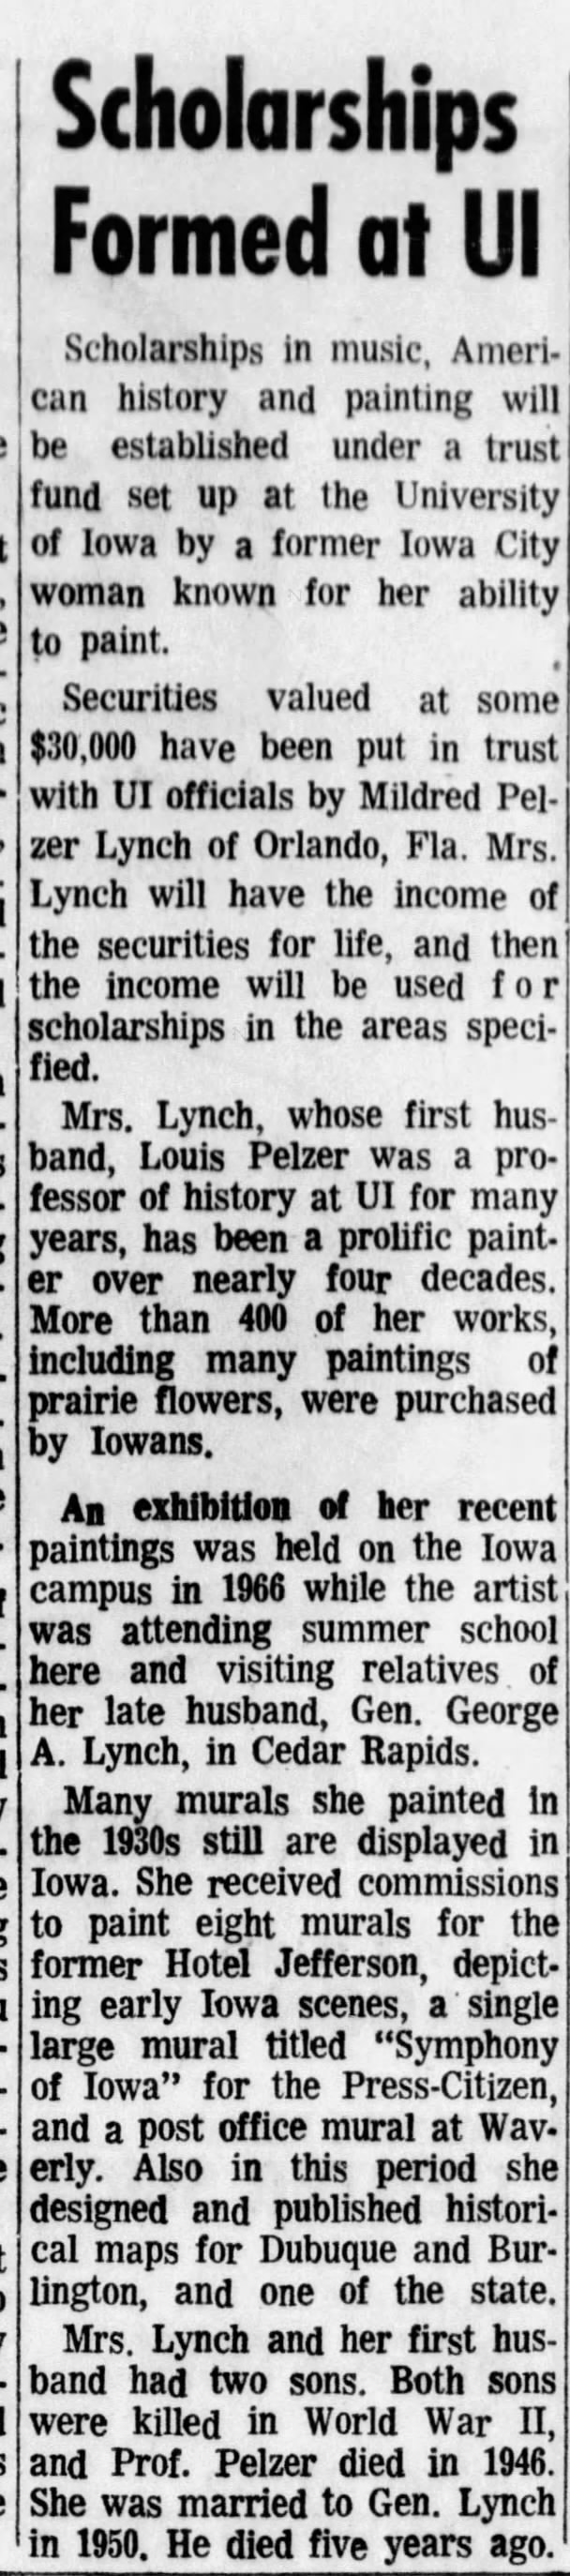 Scholarships formed at UI. The Iowa City Press-Citizen (Iowa City, Iowa) November 11, 1967, p 3